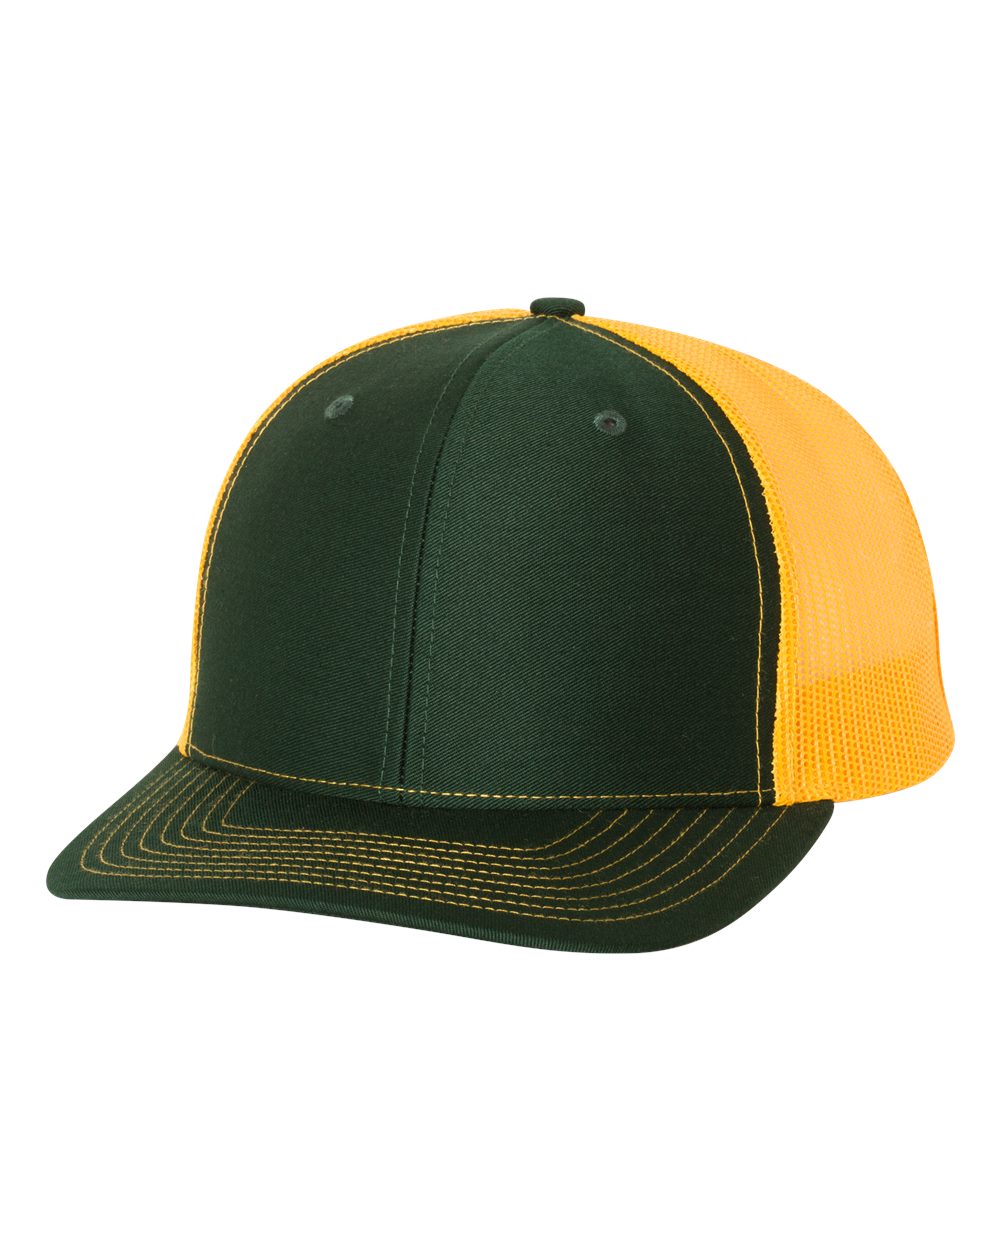 richardson cap dark green gold